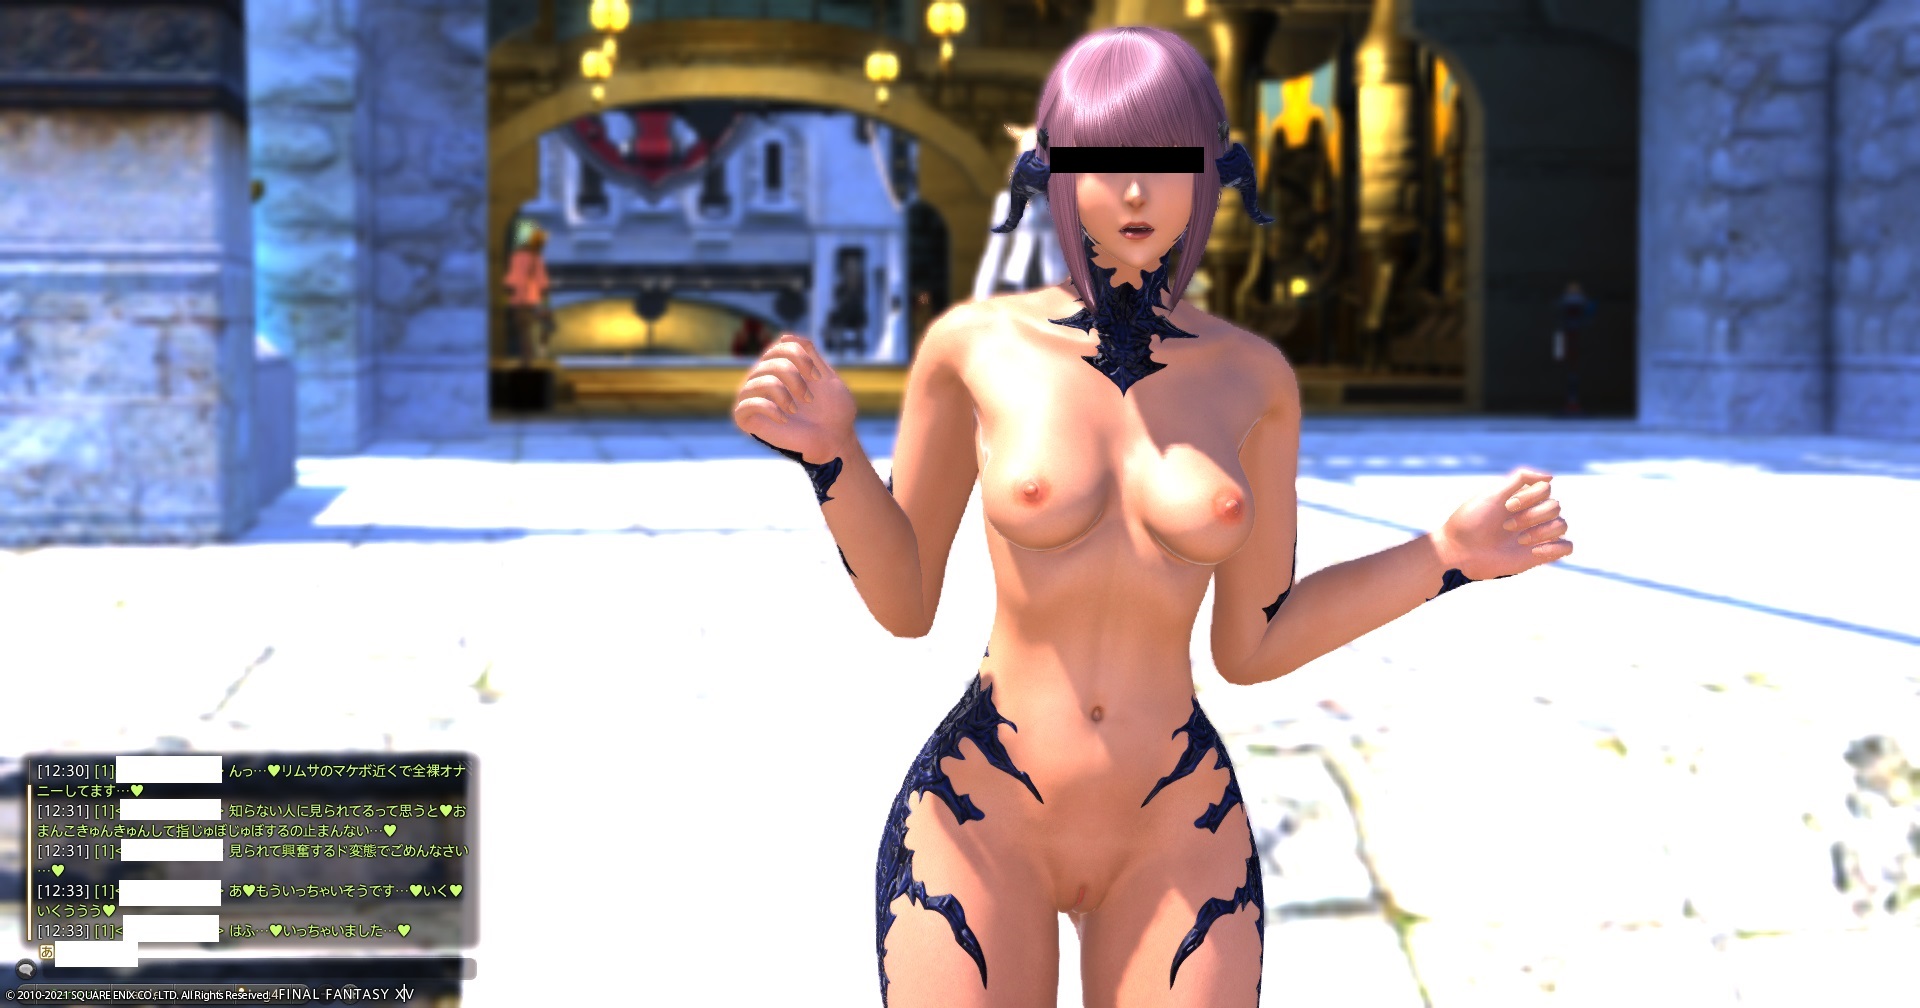 Final fantasy 14 nude mod - 🧡 Ffxiv nude mod naked scenes.